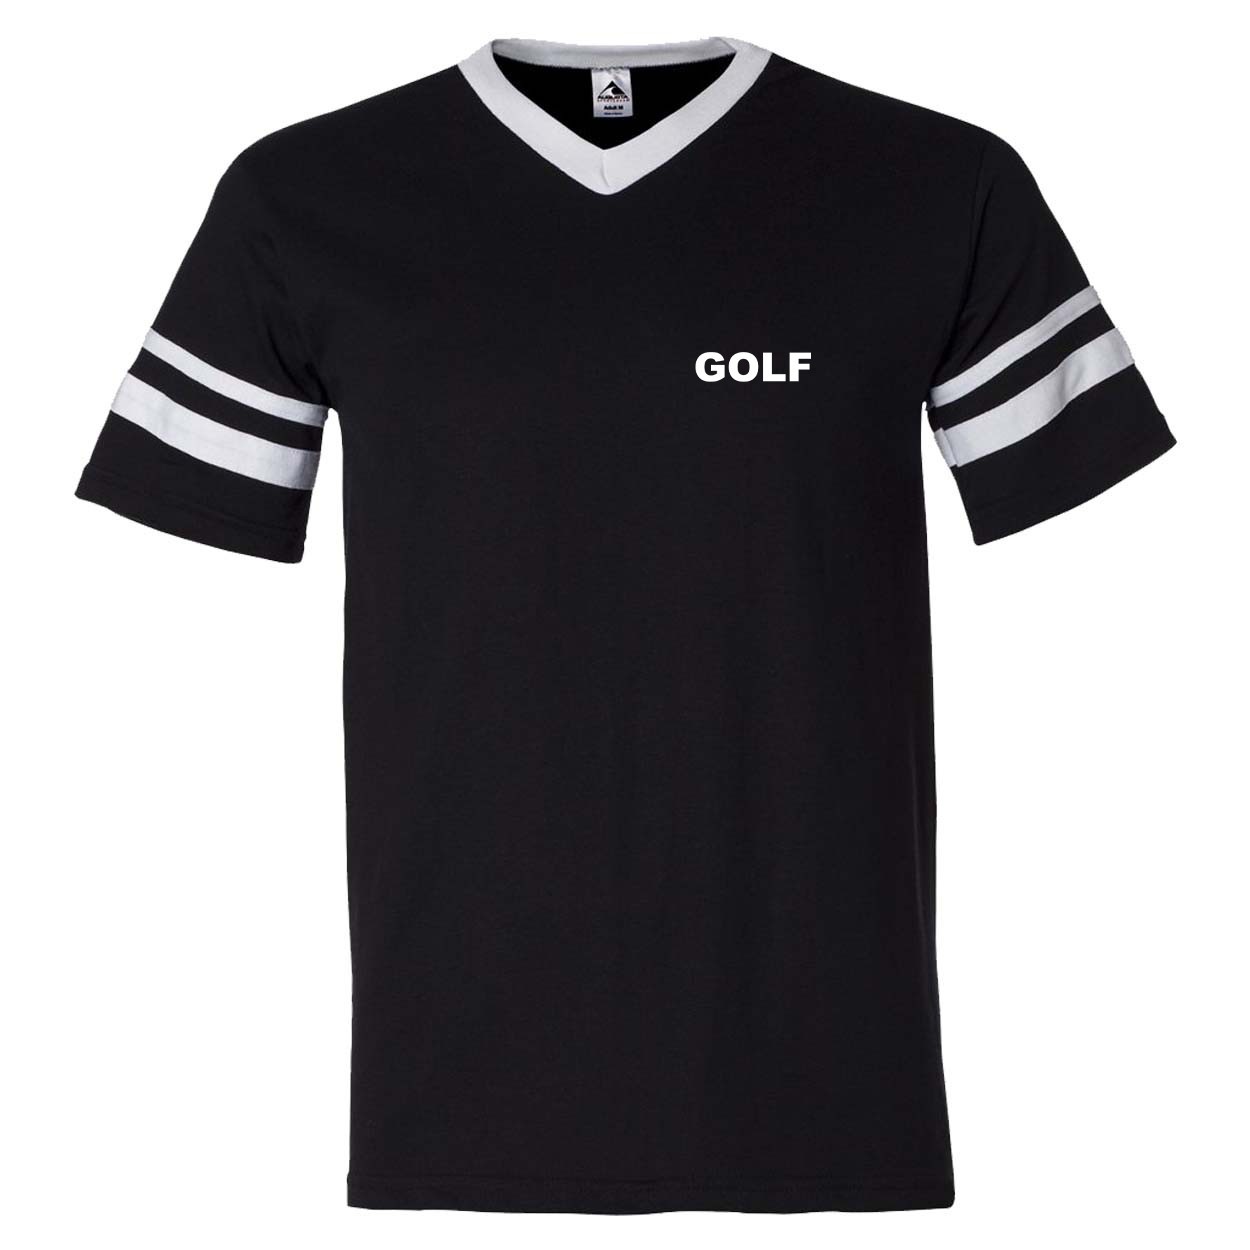 Golf Brand Logo Night Out Premium Striped Jersey T-Shirt Black/White